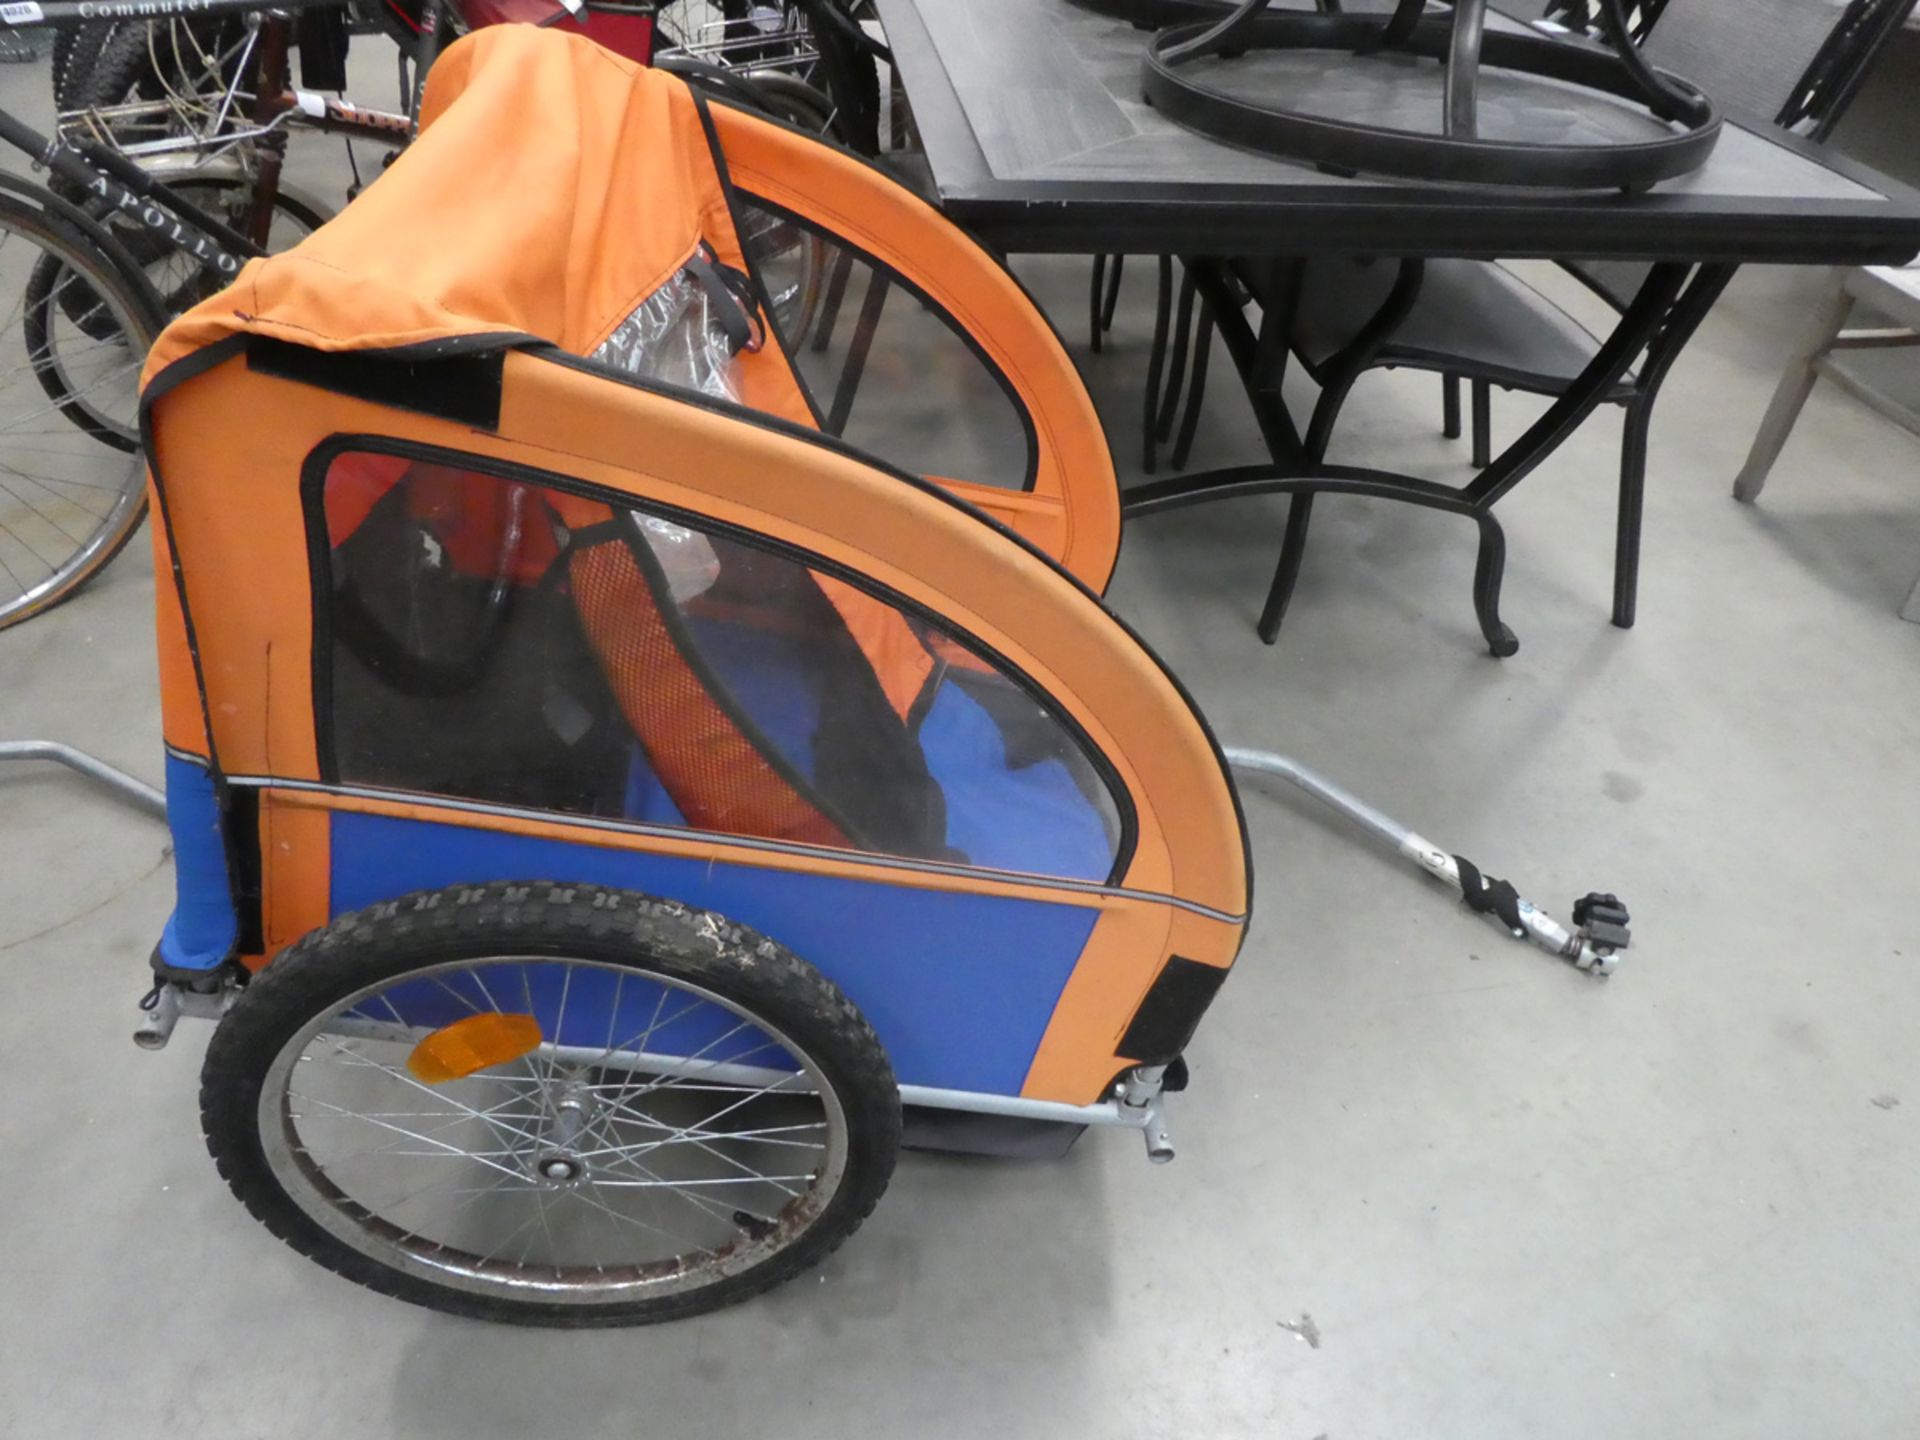 4038 - Towalong bike trailer in orange and blue